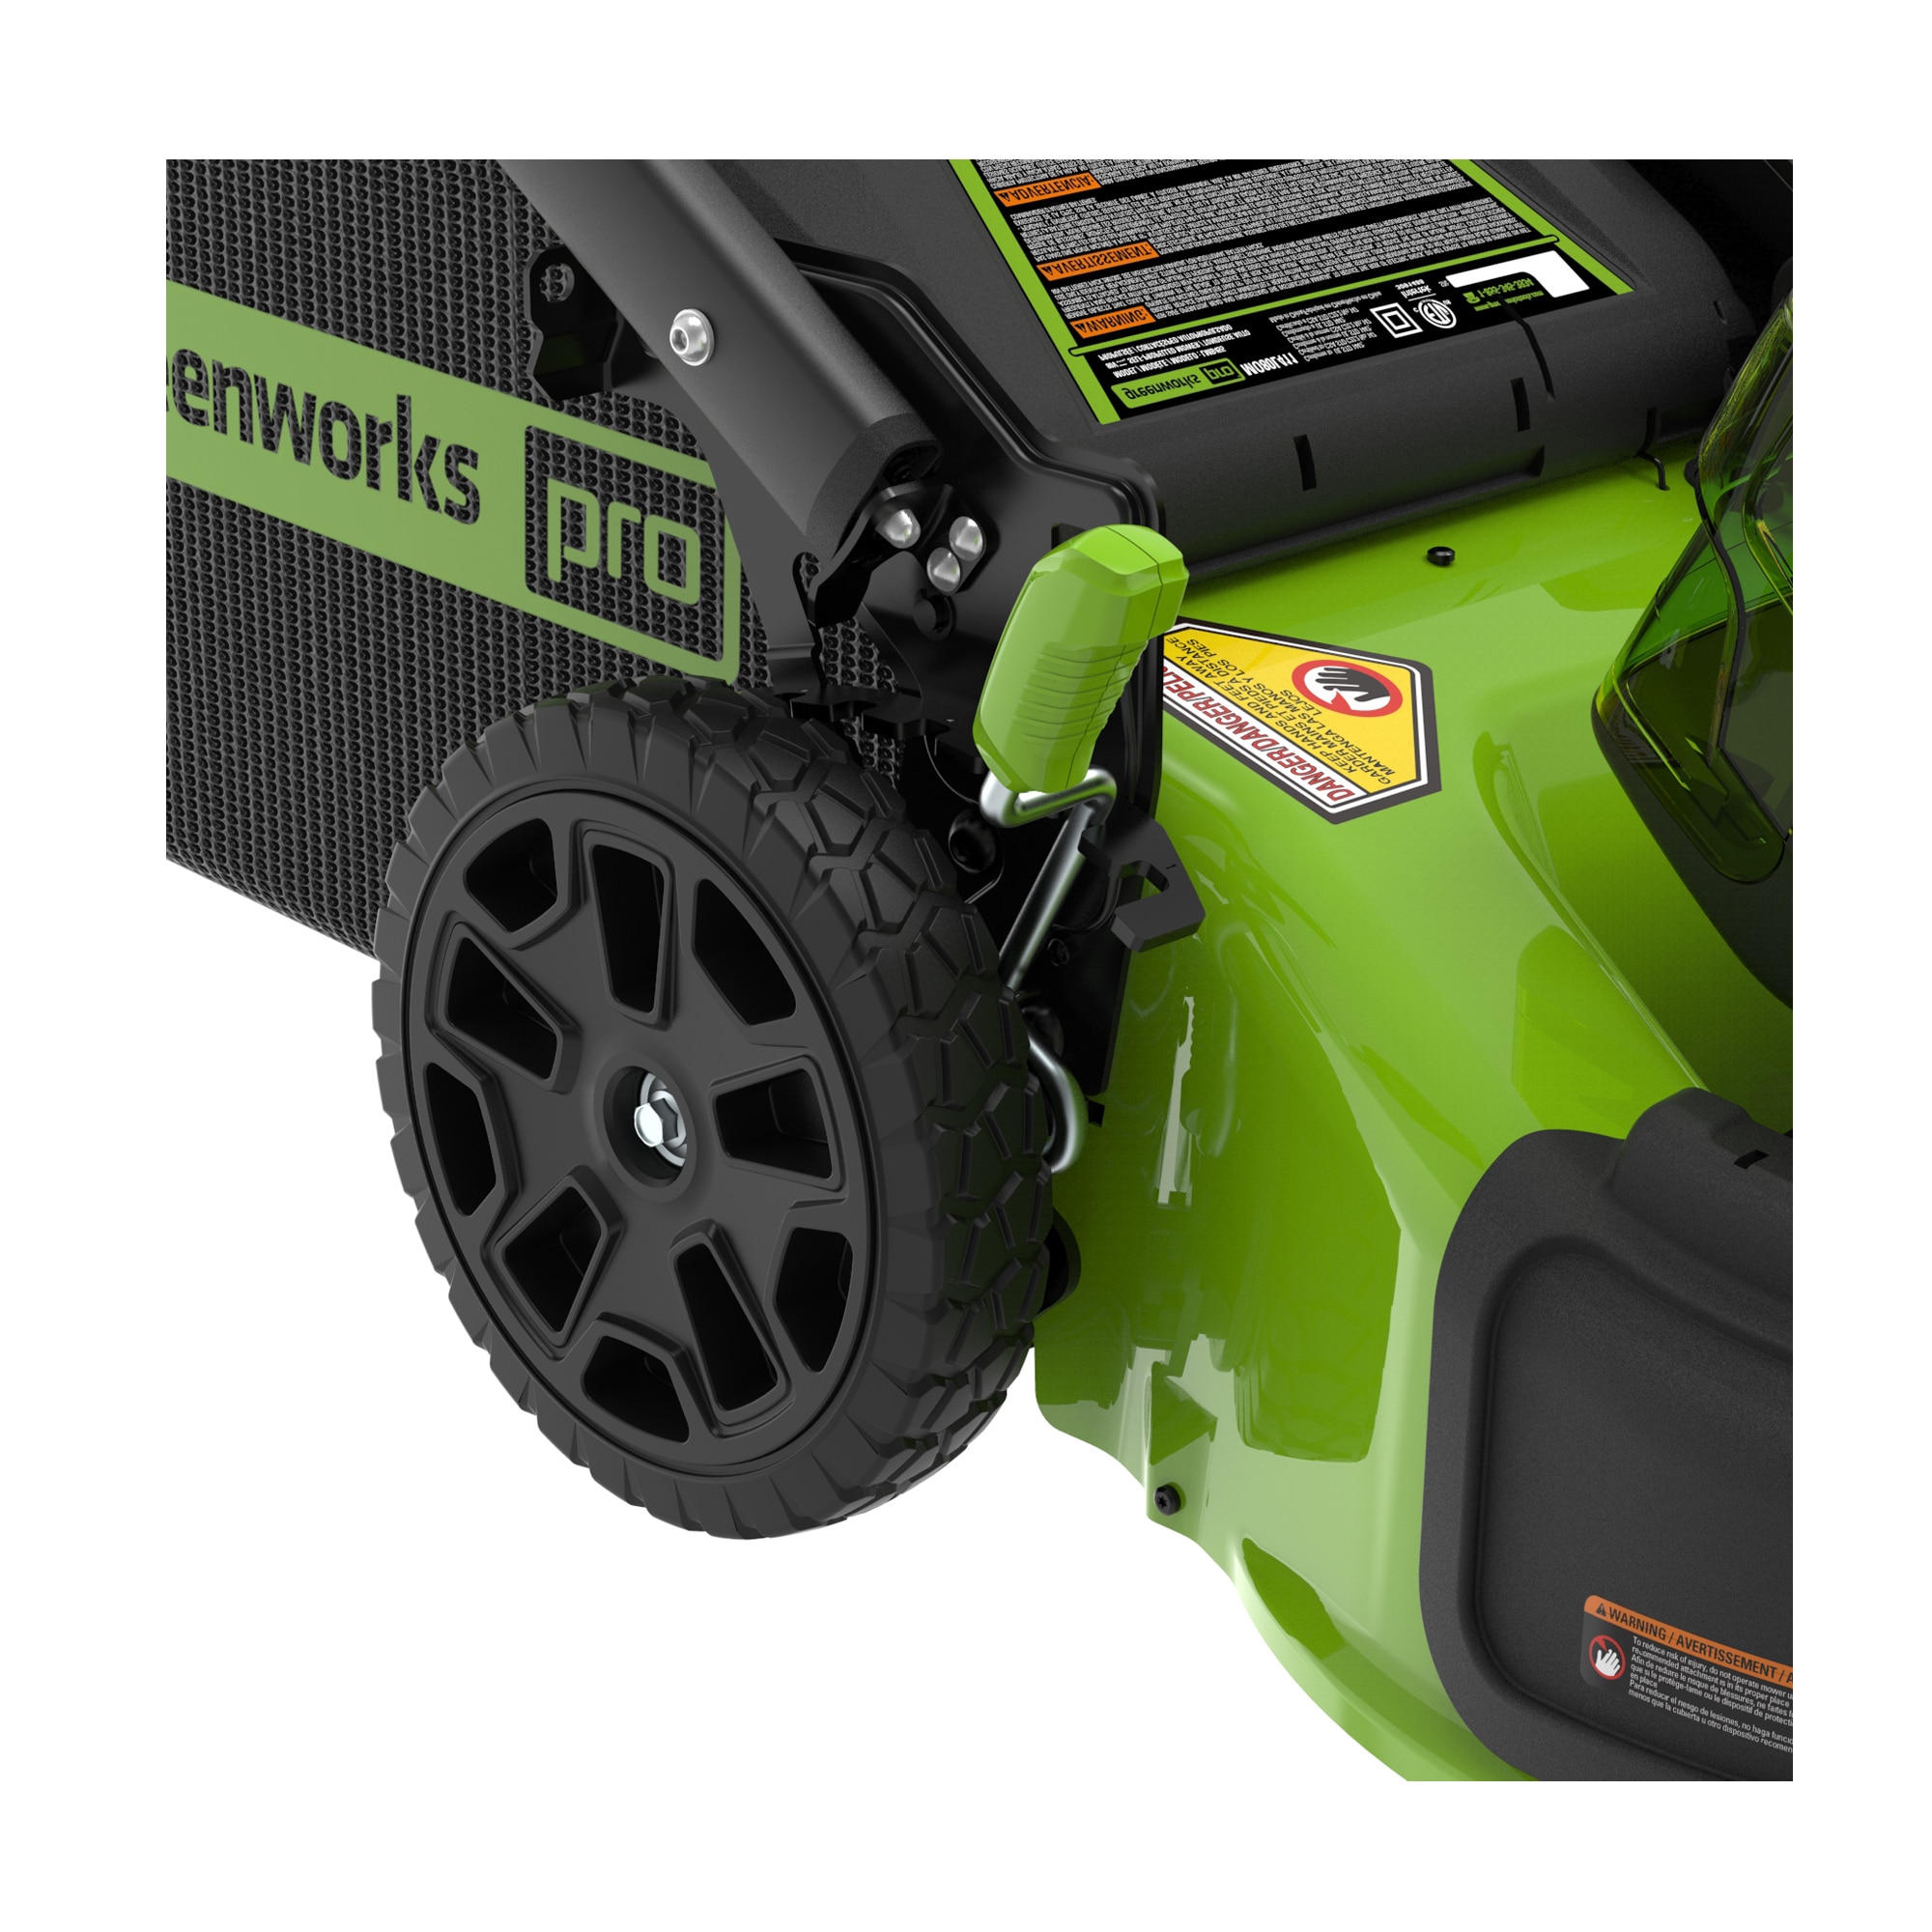 Greenworks 80V 10” Cultivator & 2AH 80V Battery With Rapid Charger